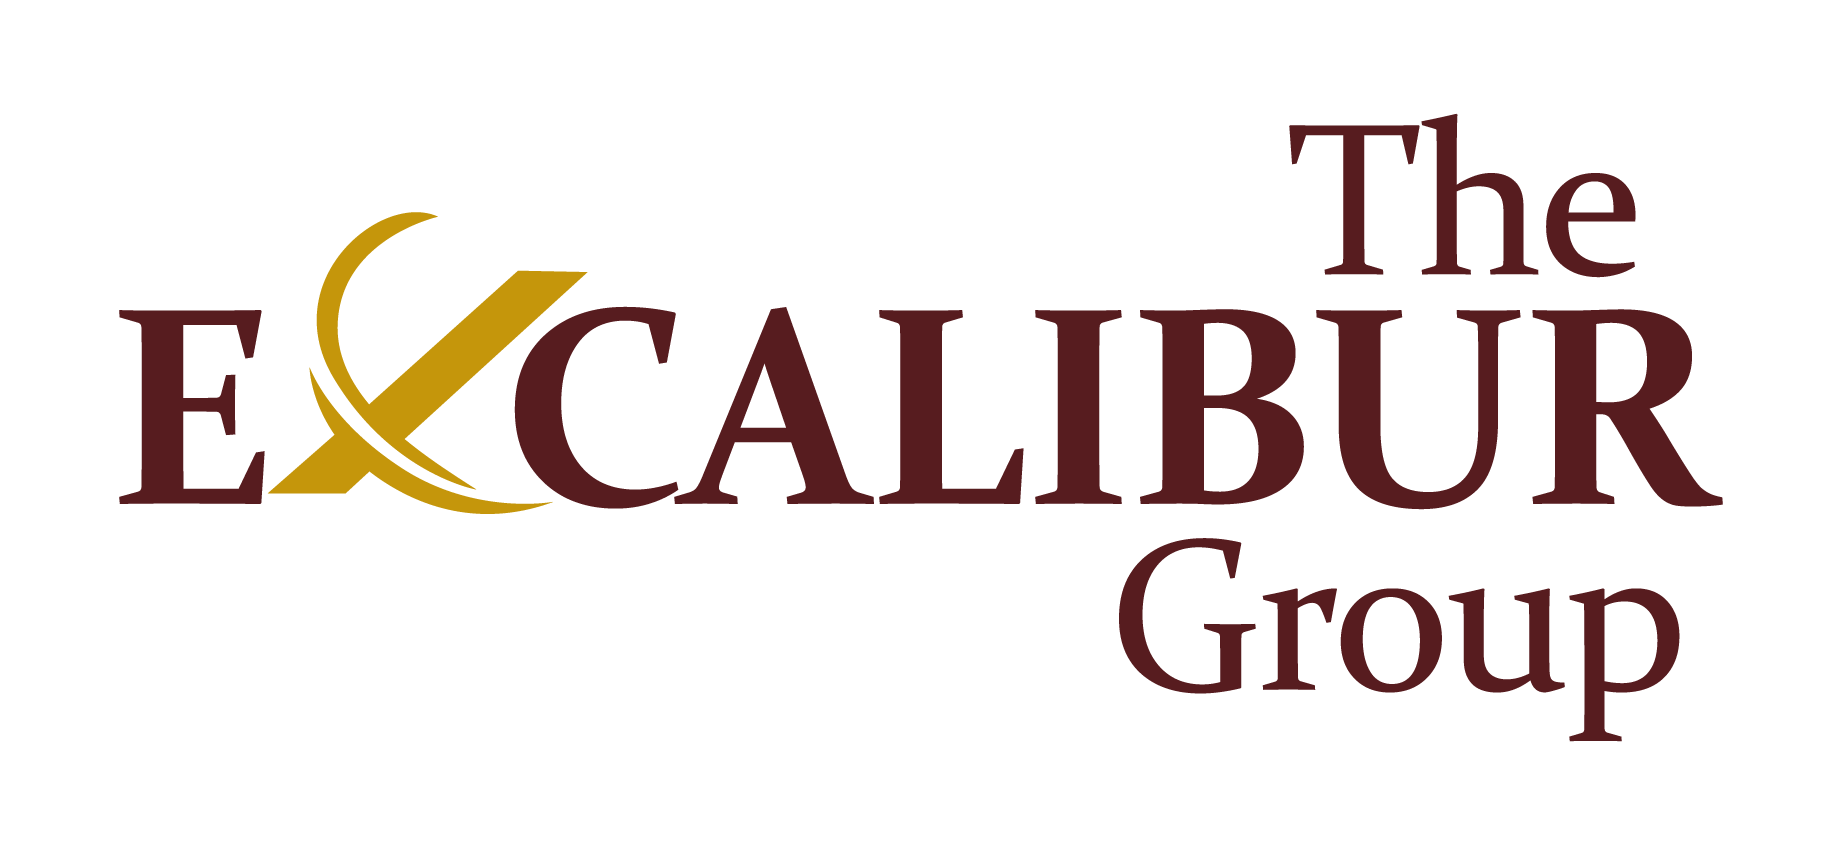 Excalibur Logo - The Excalibur Group